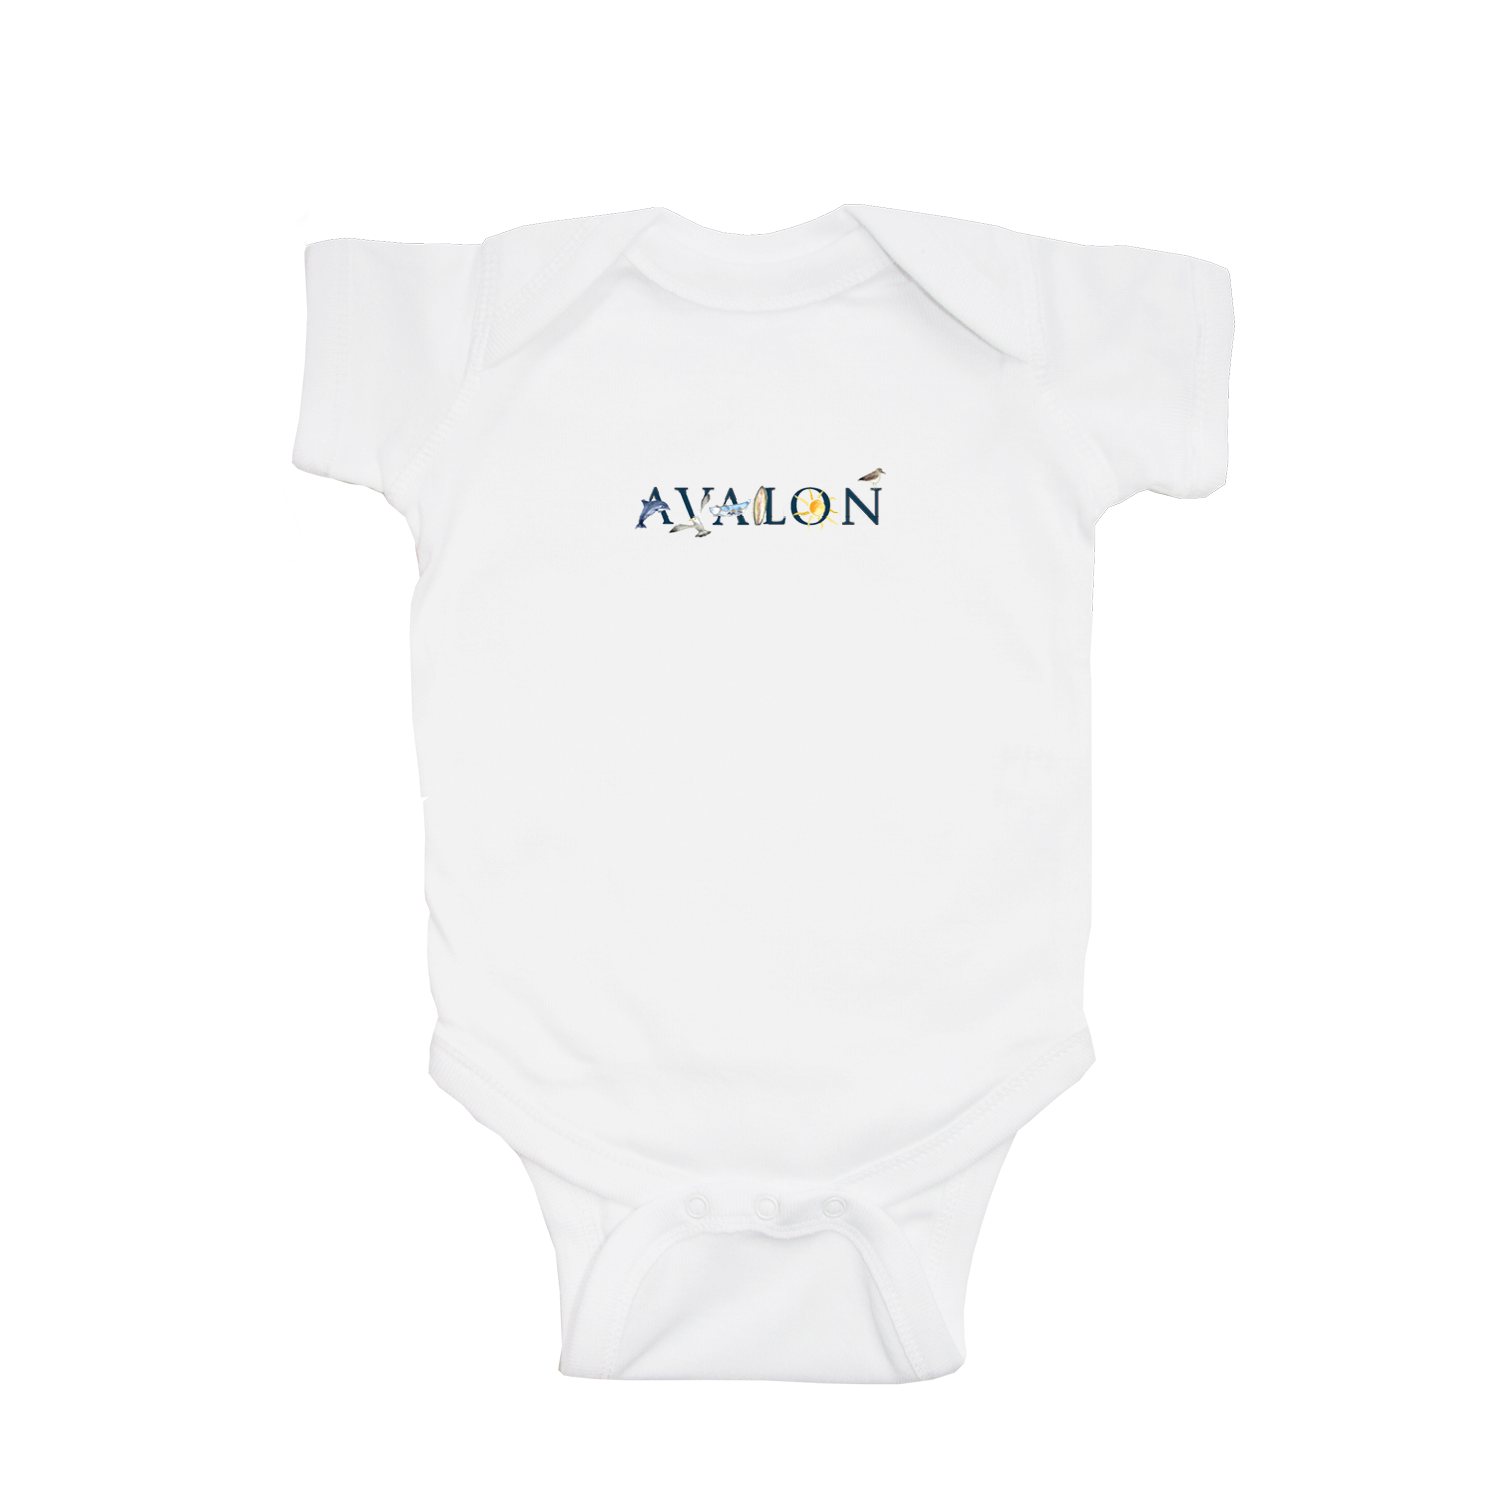 Avalon baby snap up short sleeve